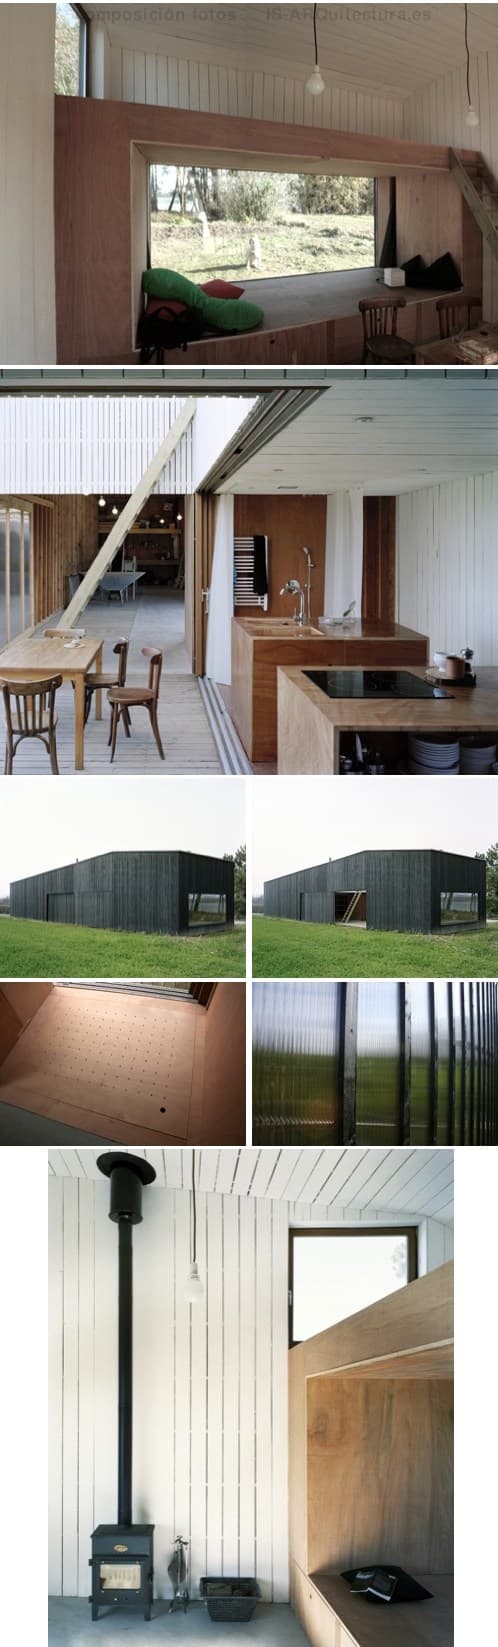 granja_oyster-casa-madera-fotos del interior